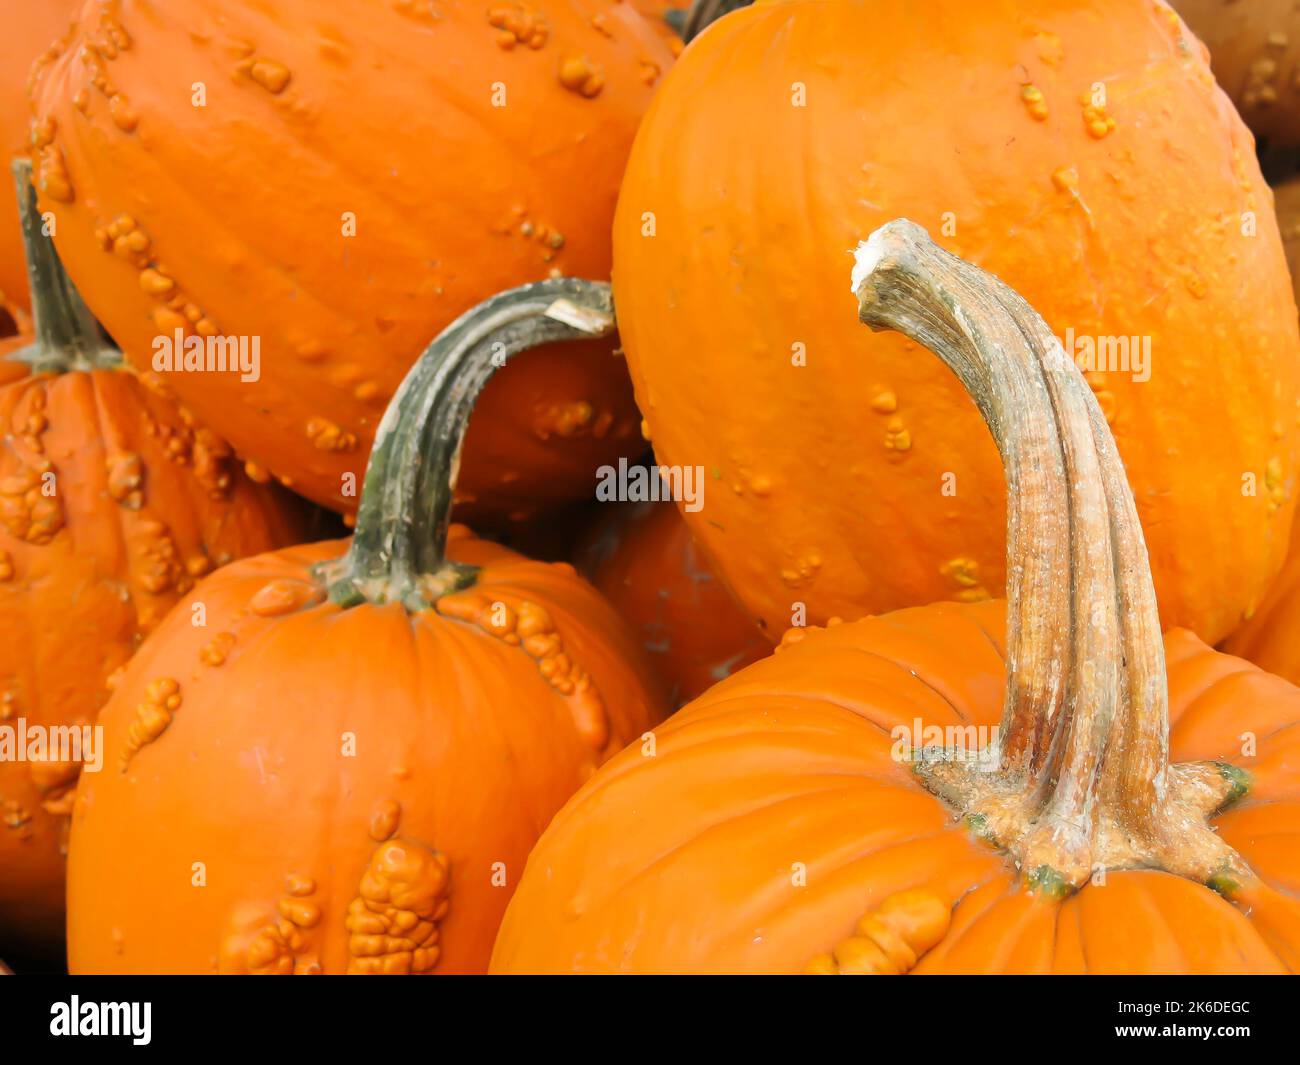 Close Up - Knuckle Head Pumpkins Stock Photo